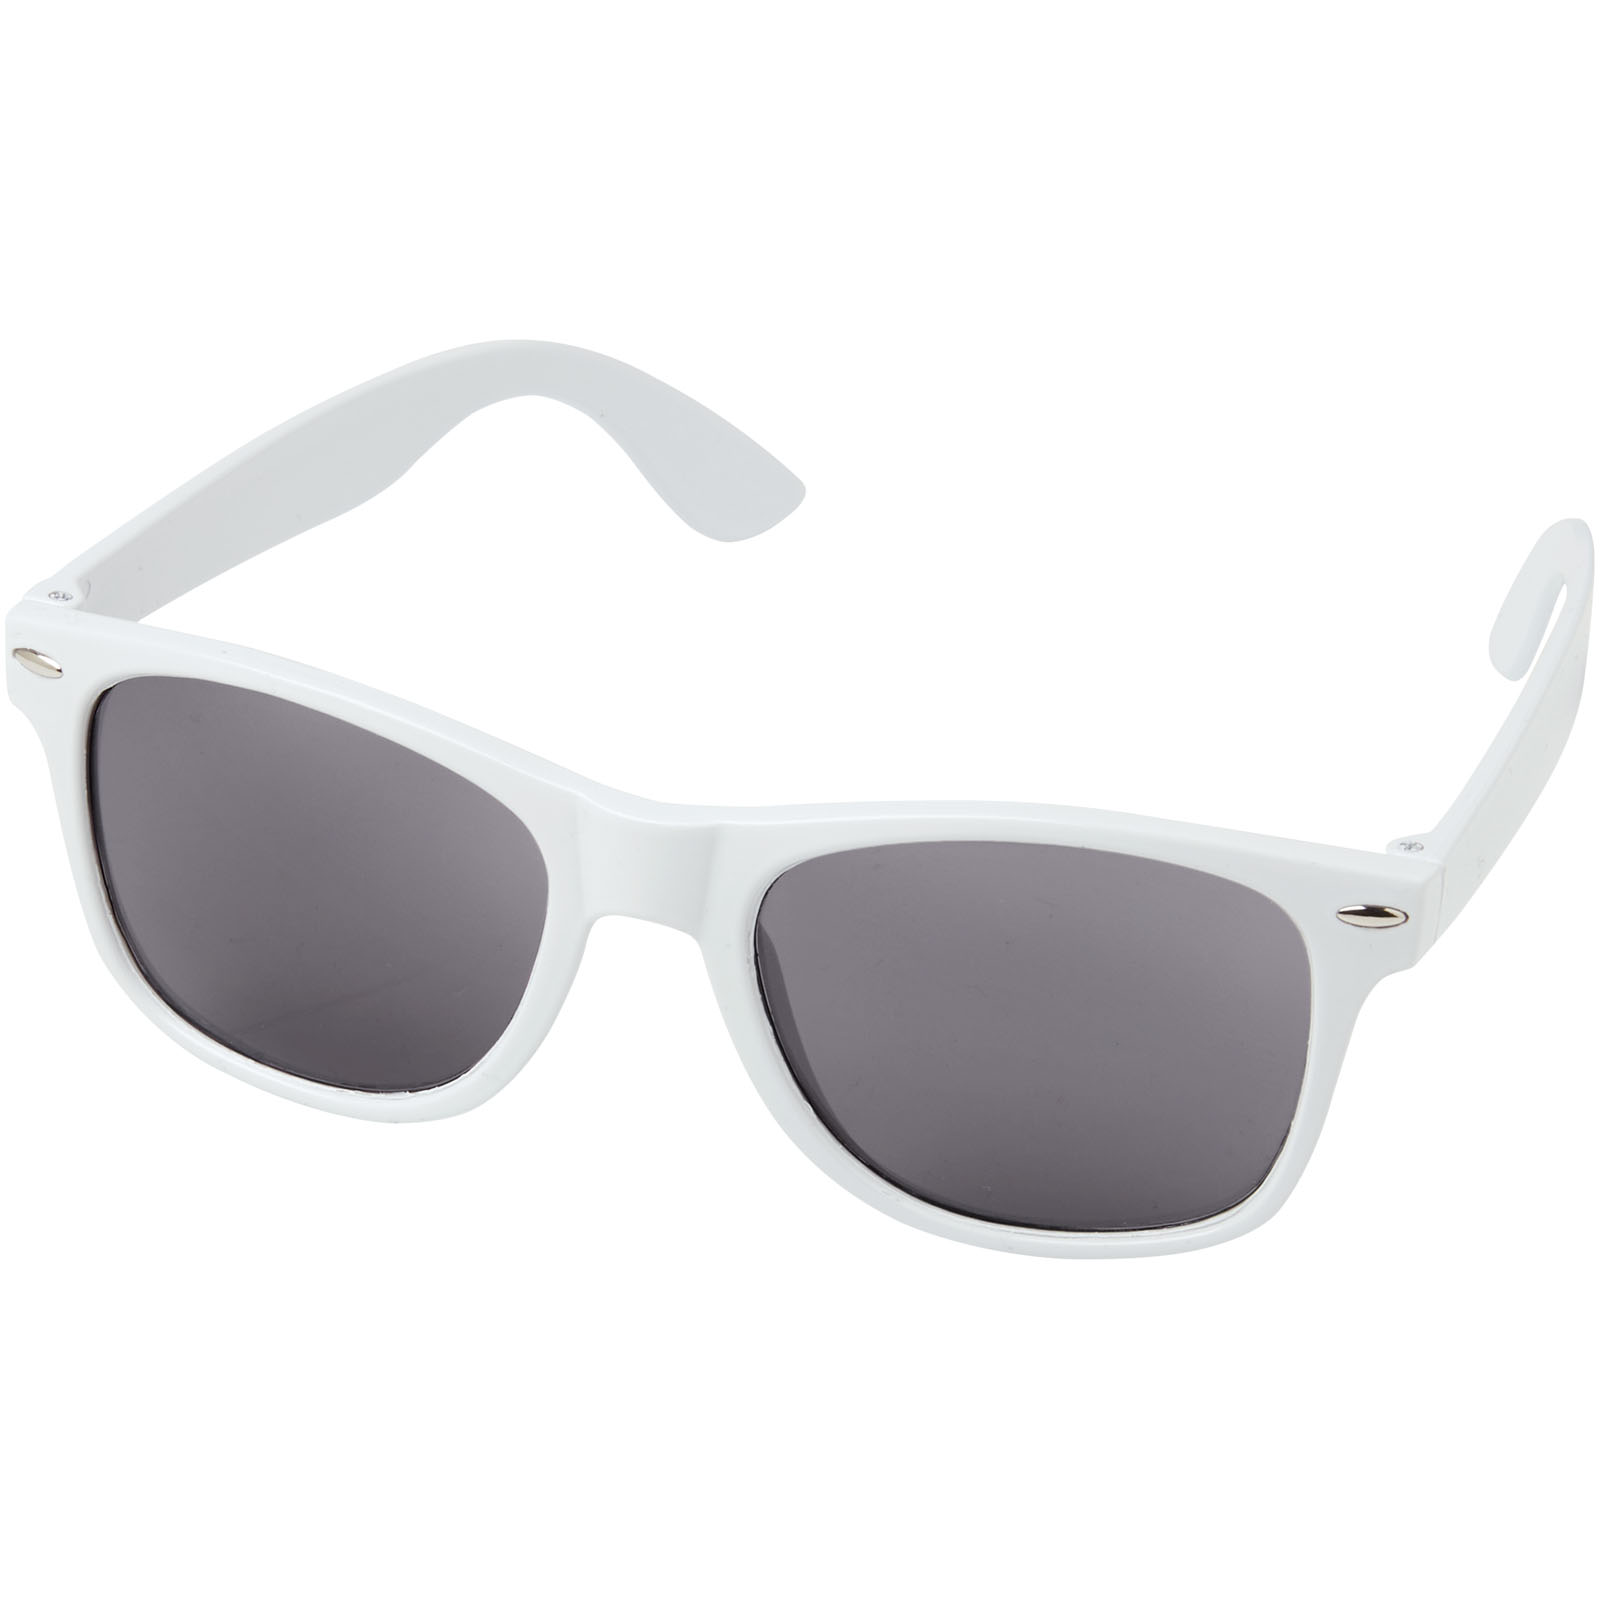 Advertising Sunglasses - Sun Ray recycled plastic sunglasses - 0